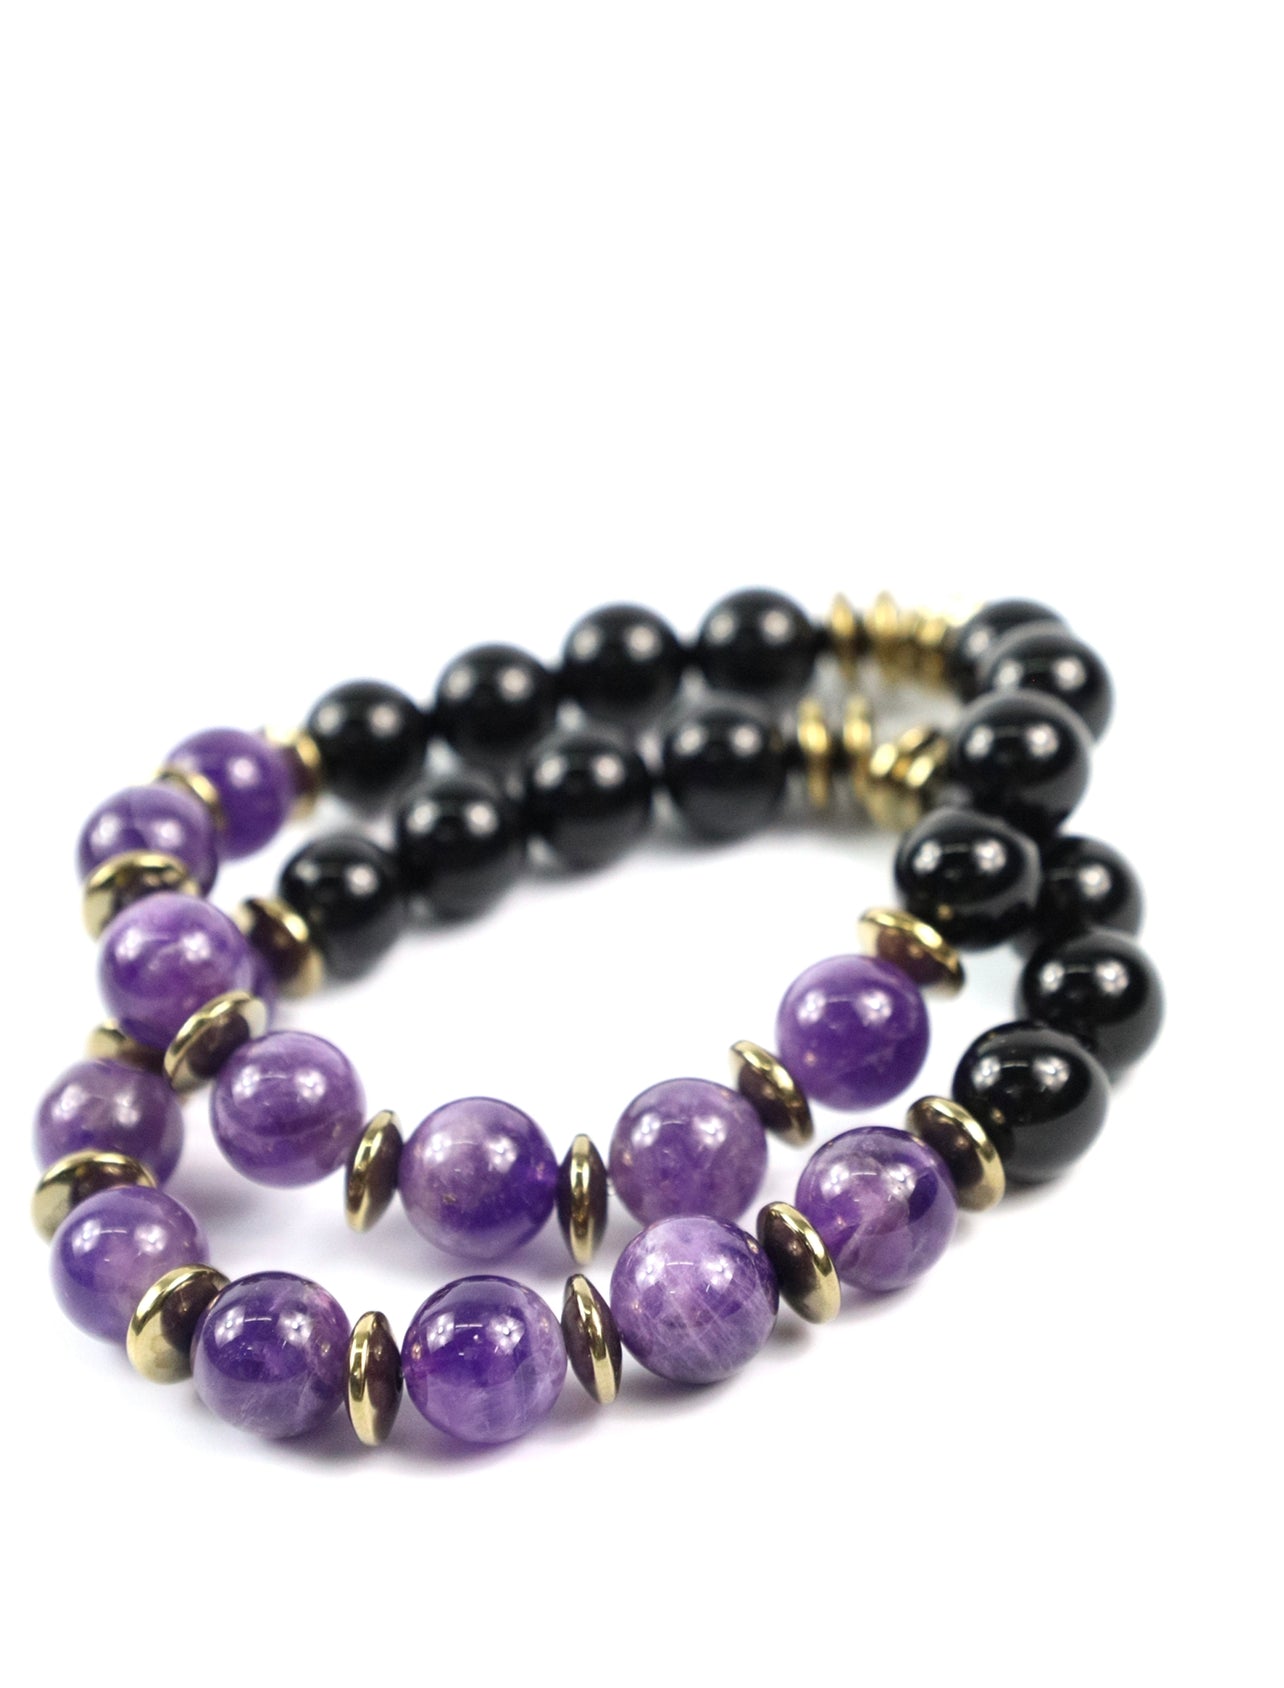 Amethyst Bracelet “Large Beads”